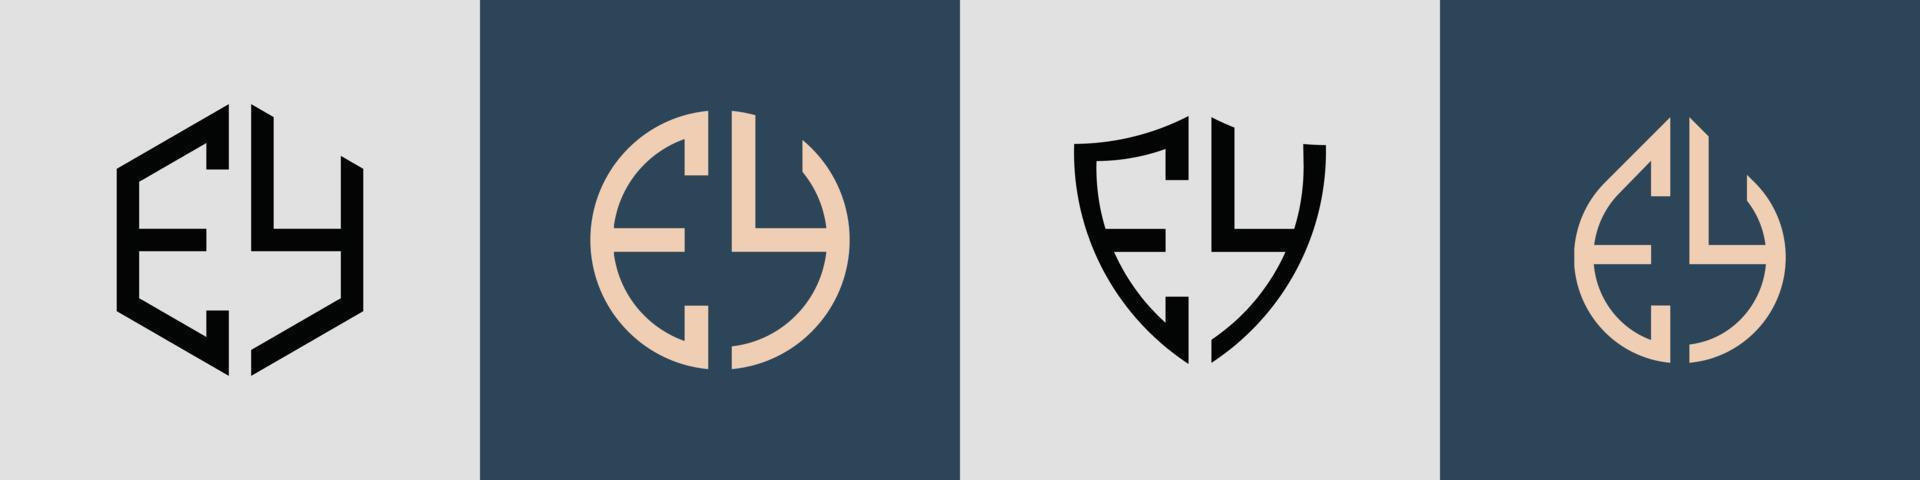 Creative simple Initial Letters EY Logo Designs Bundle. vector